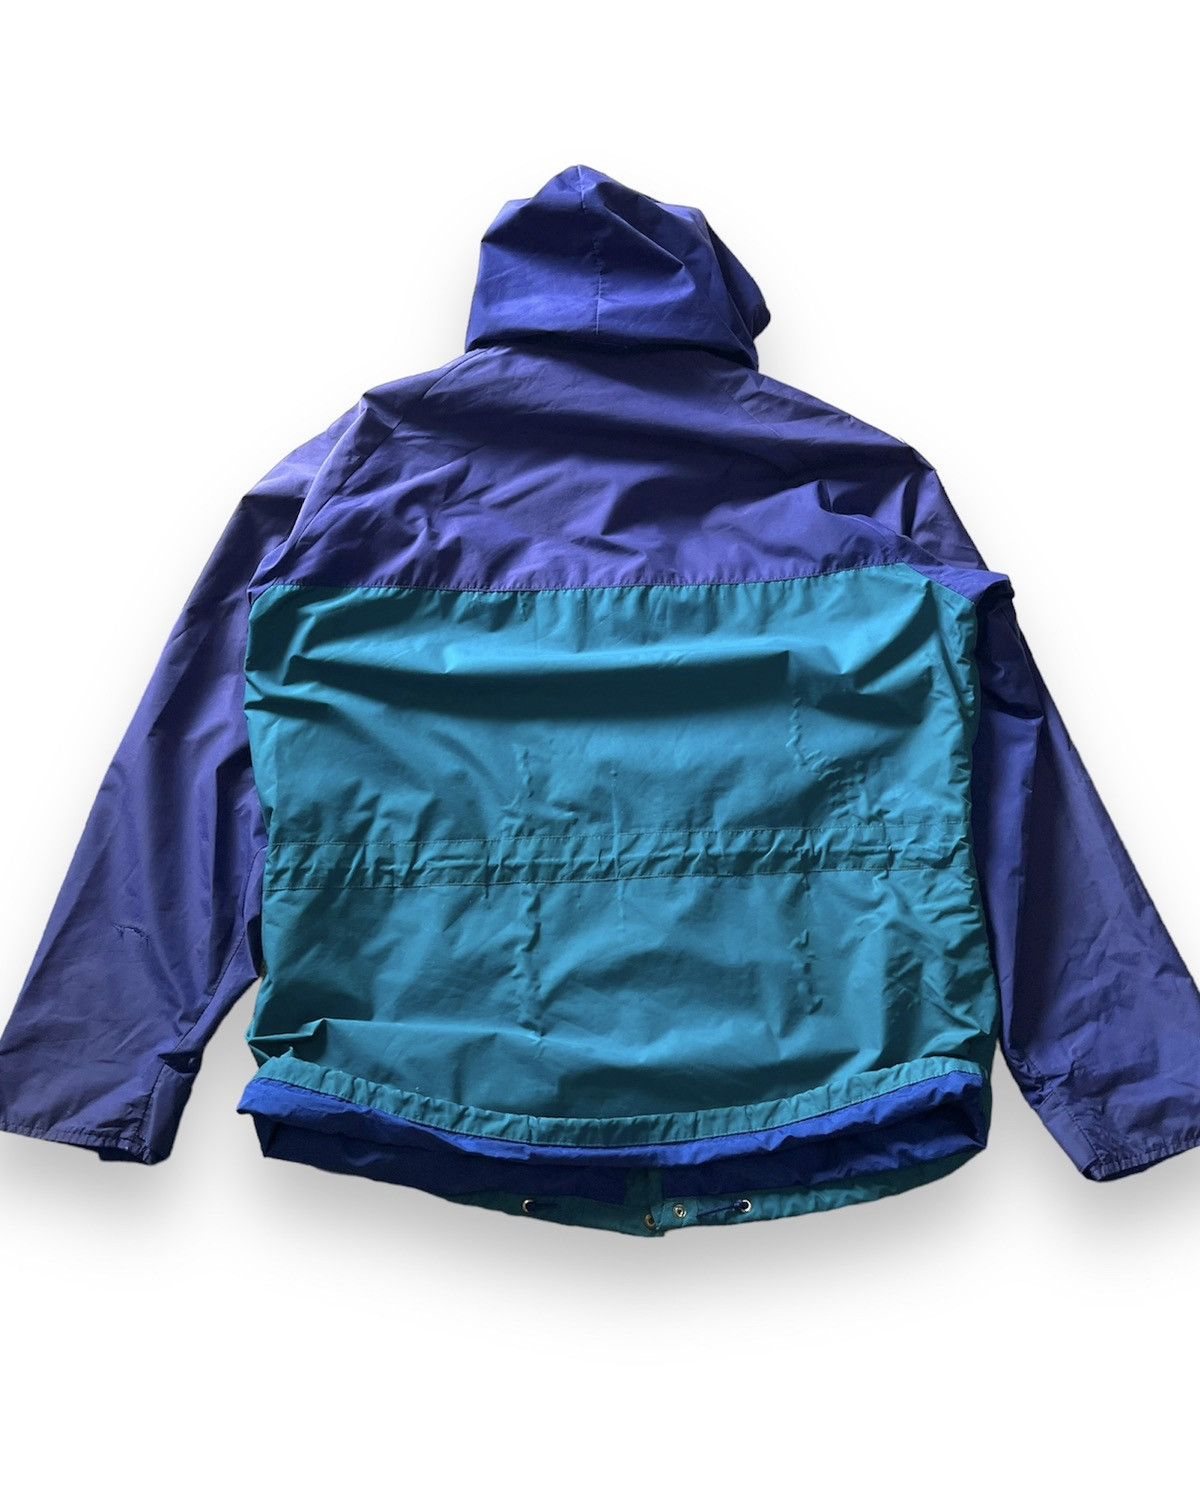 Vintage Berghaus Goretex Water Resistant Sweater Jacket - 2